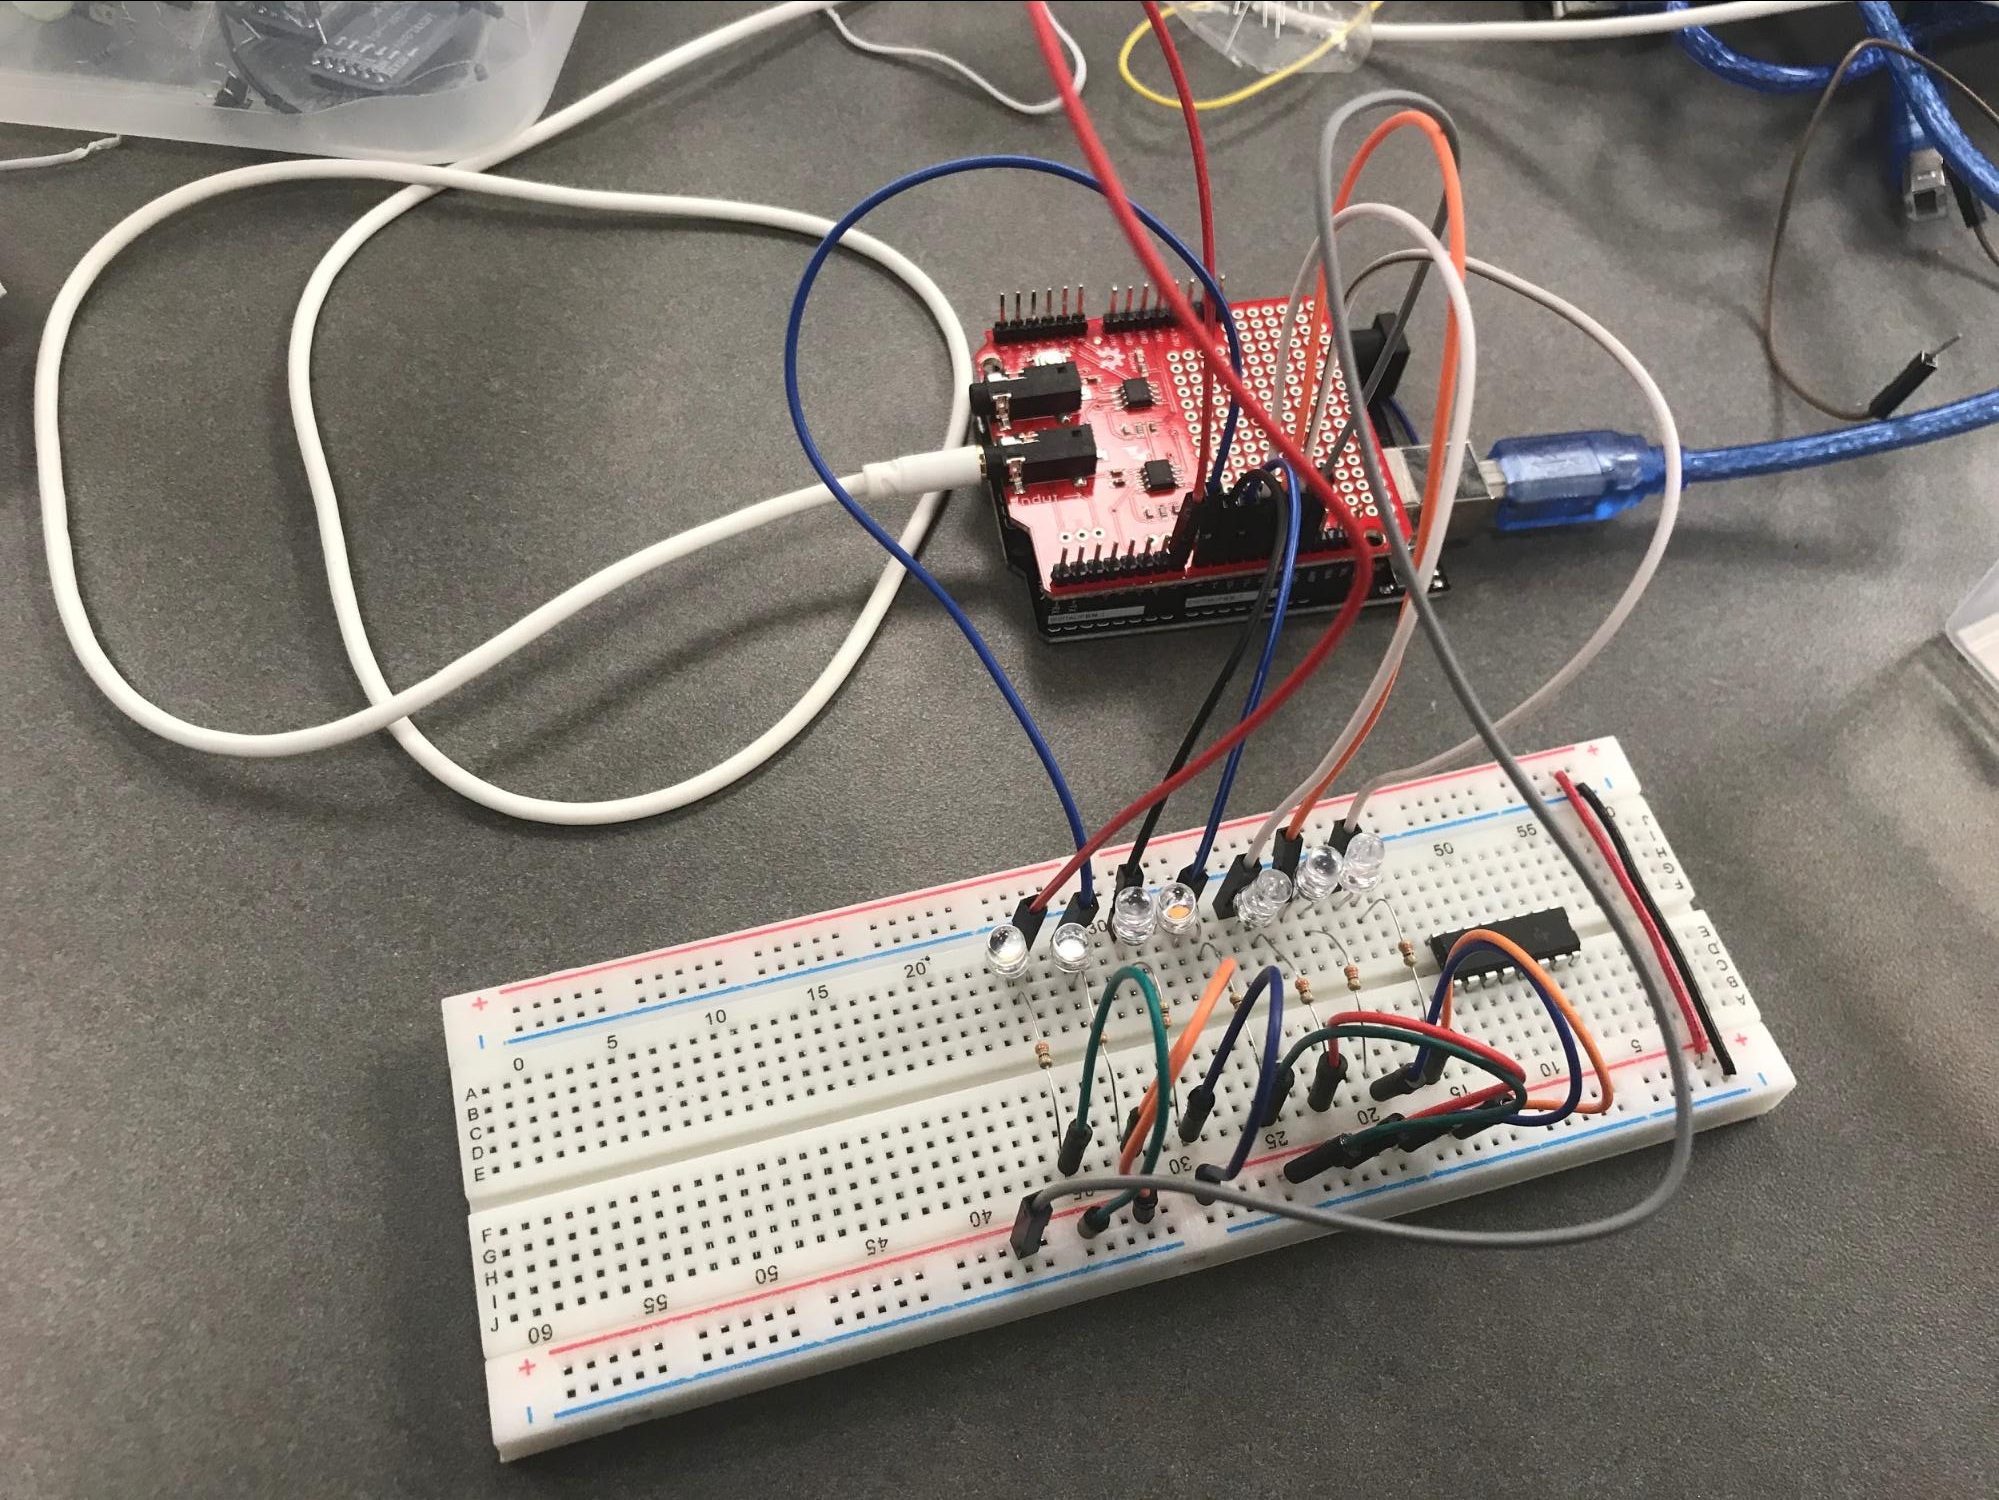  programming the lights 